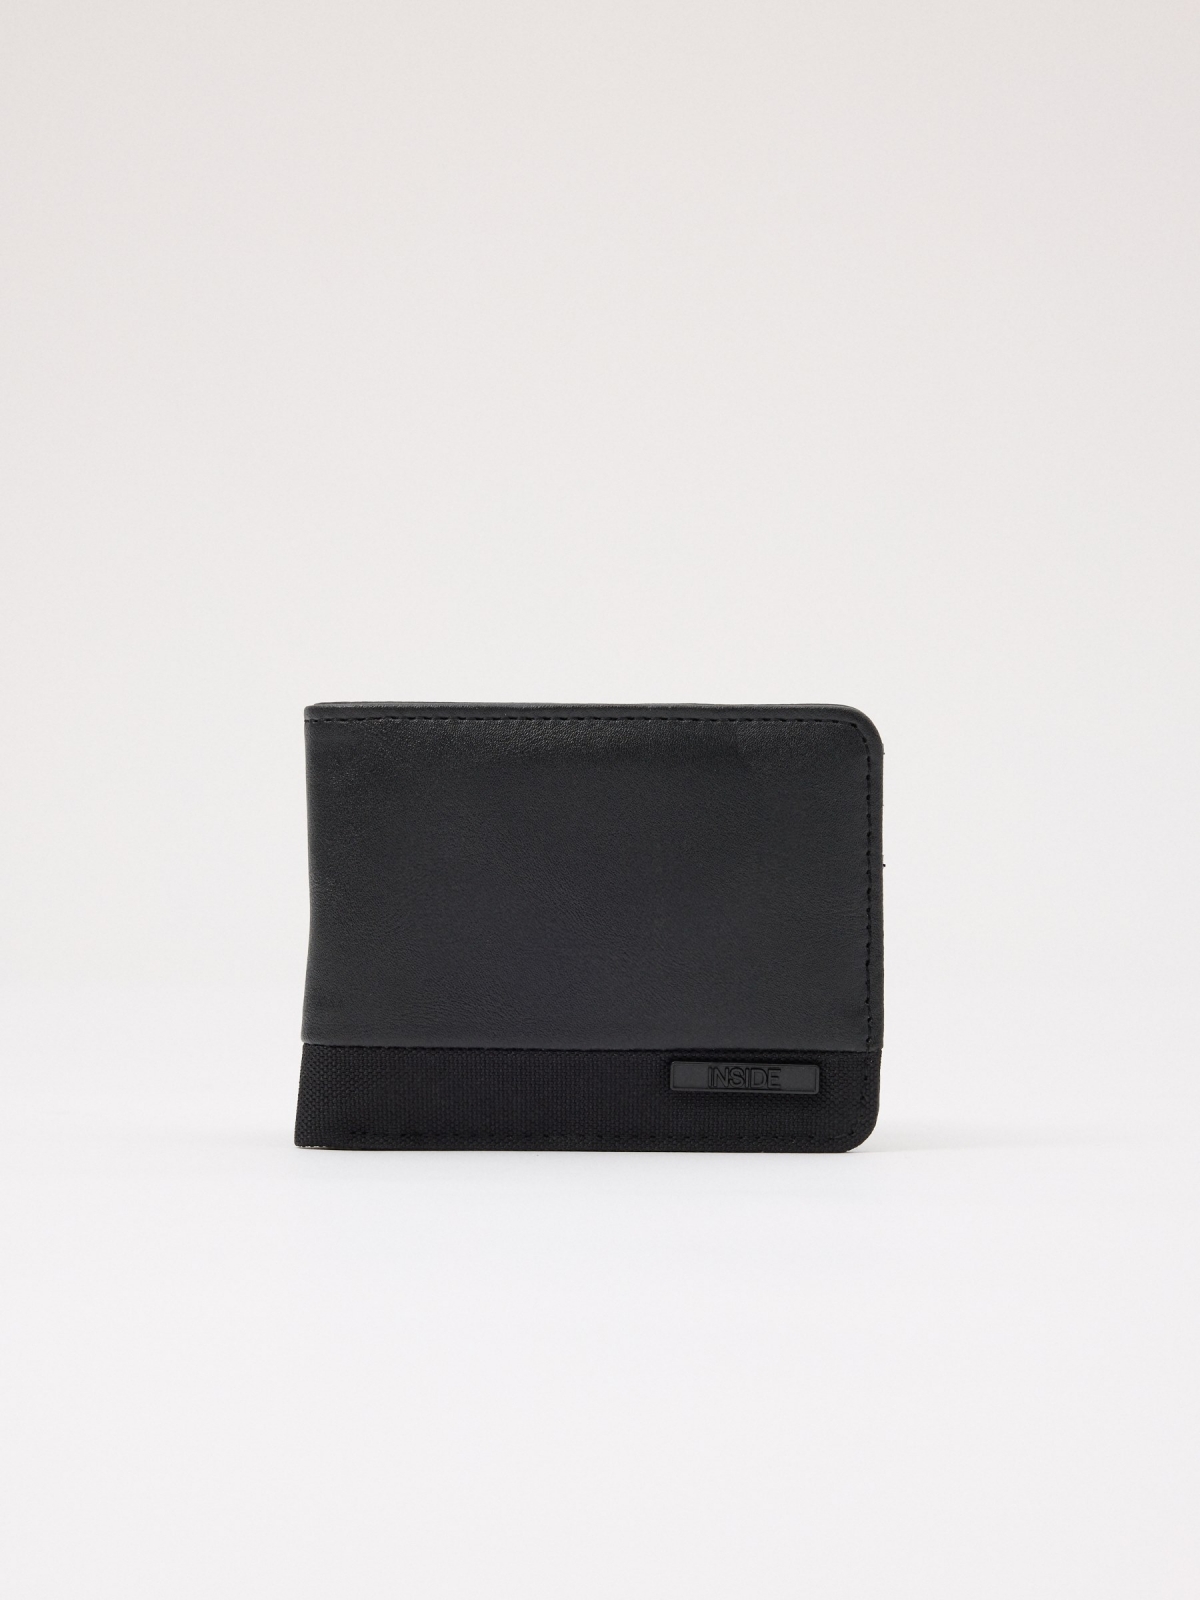 Combined popiel wallet black